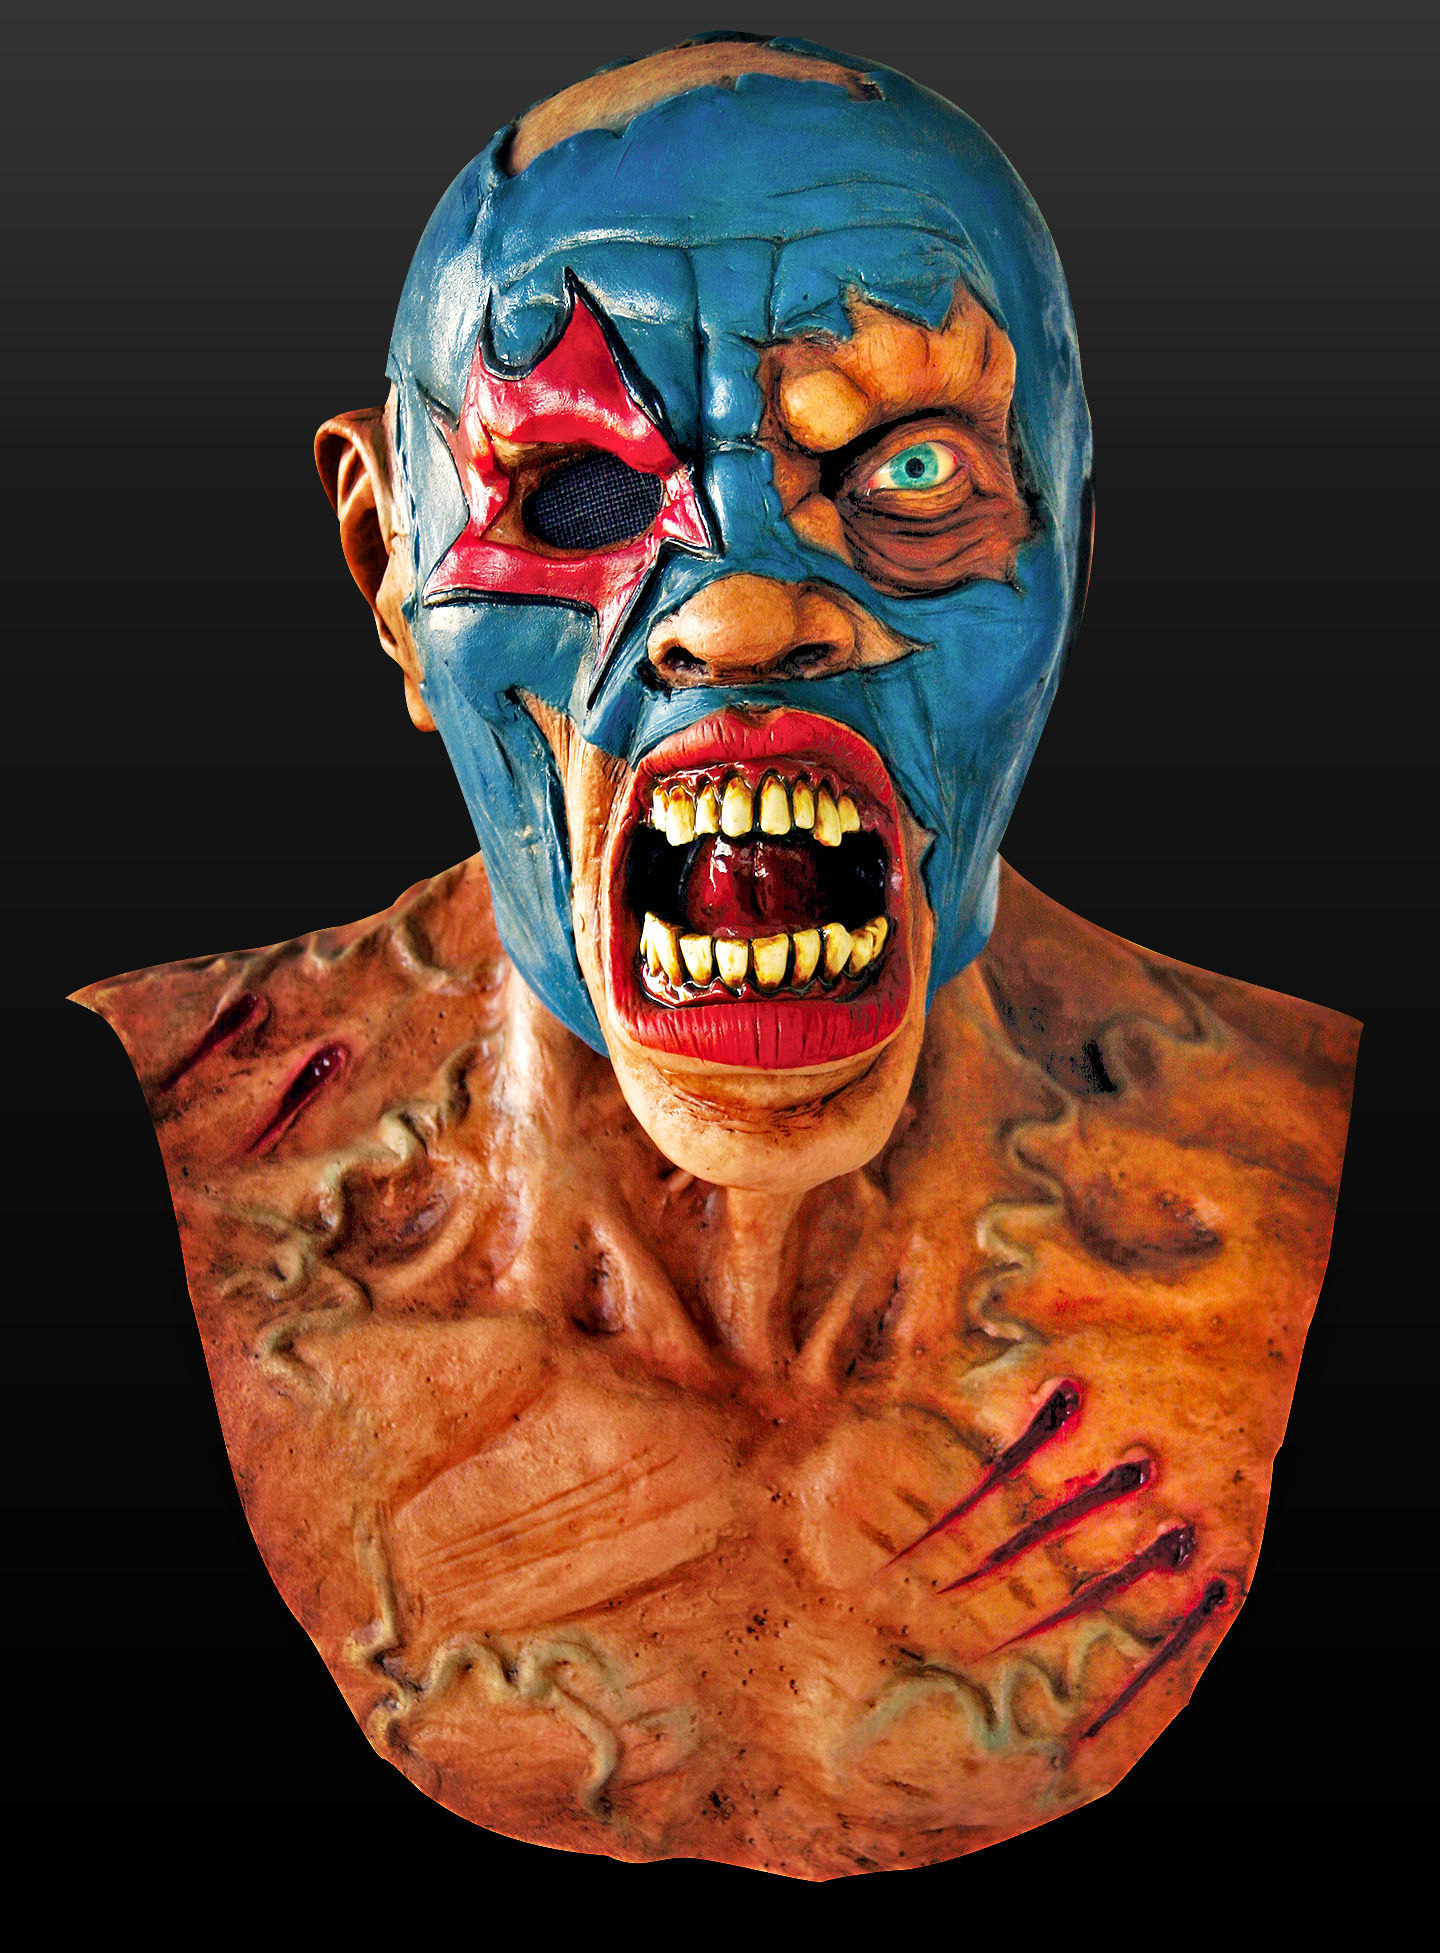 D.F.A Matches 104210-zombie-wrestler-maske-mask?$fullsize$